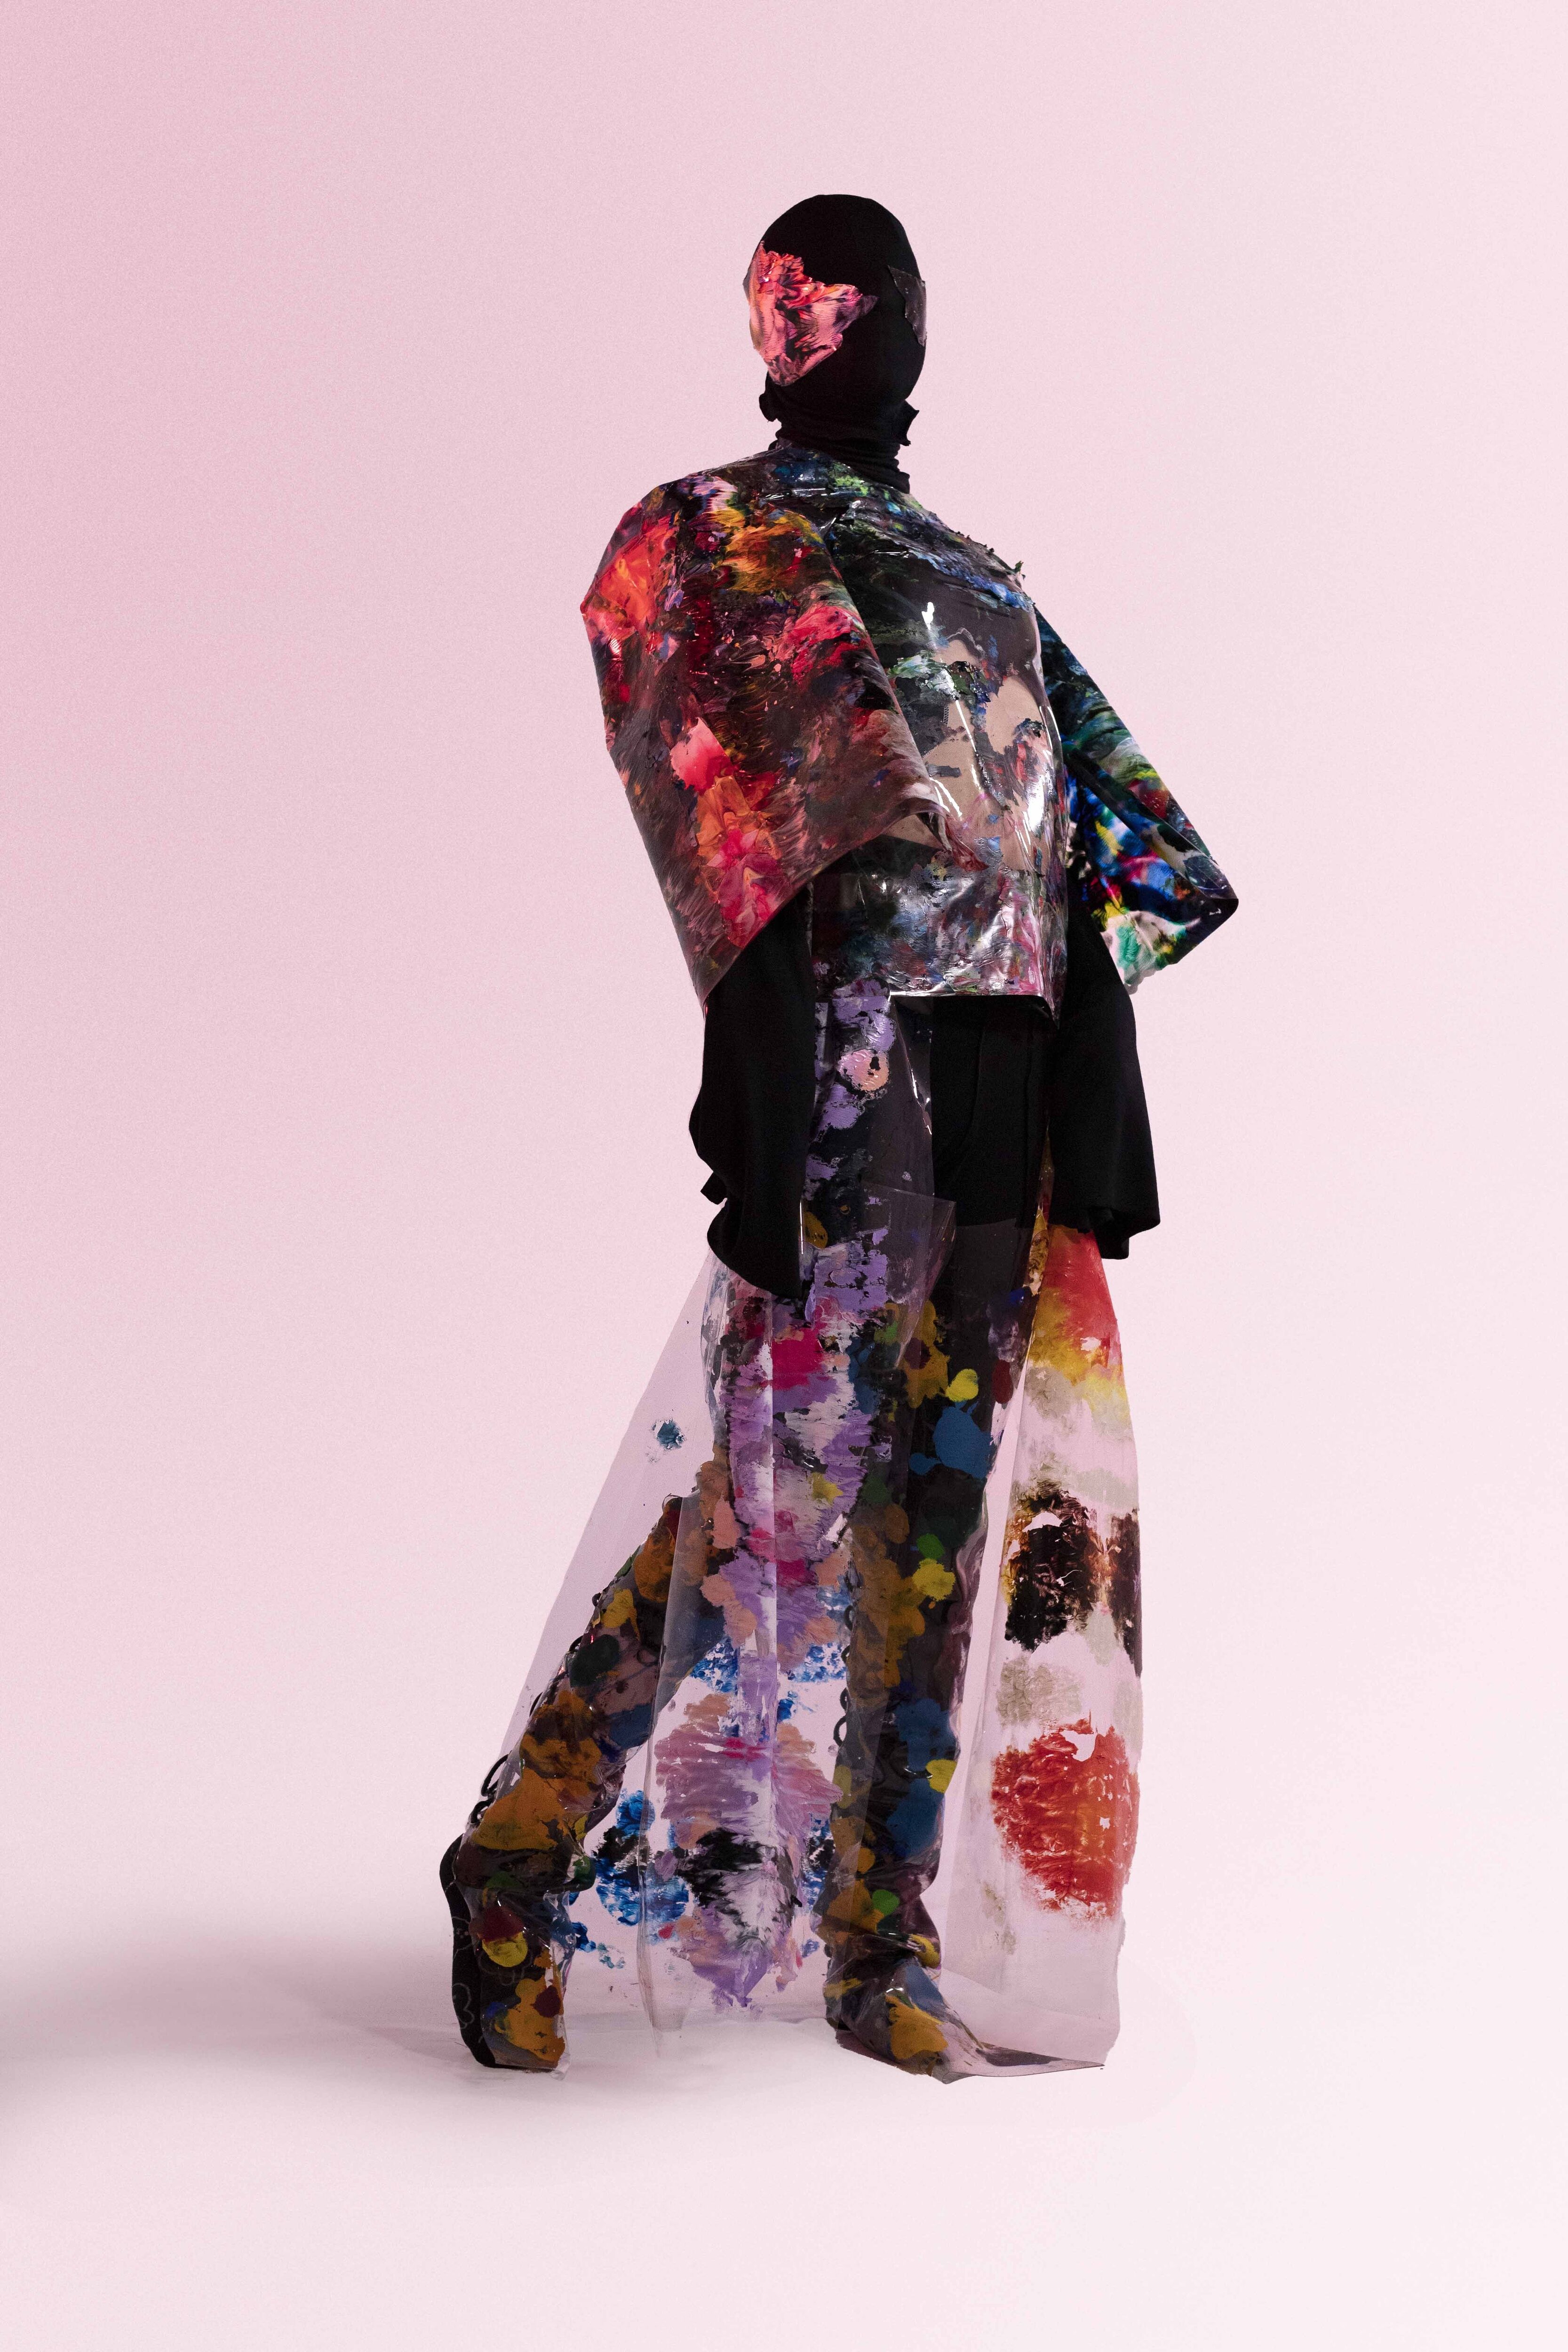 A person models a translucent, floral-painted cloak against a pink backdrop.